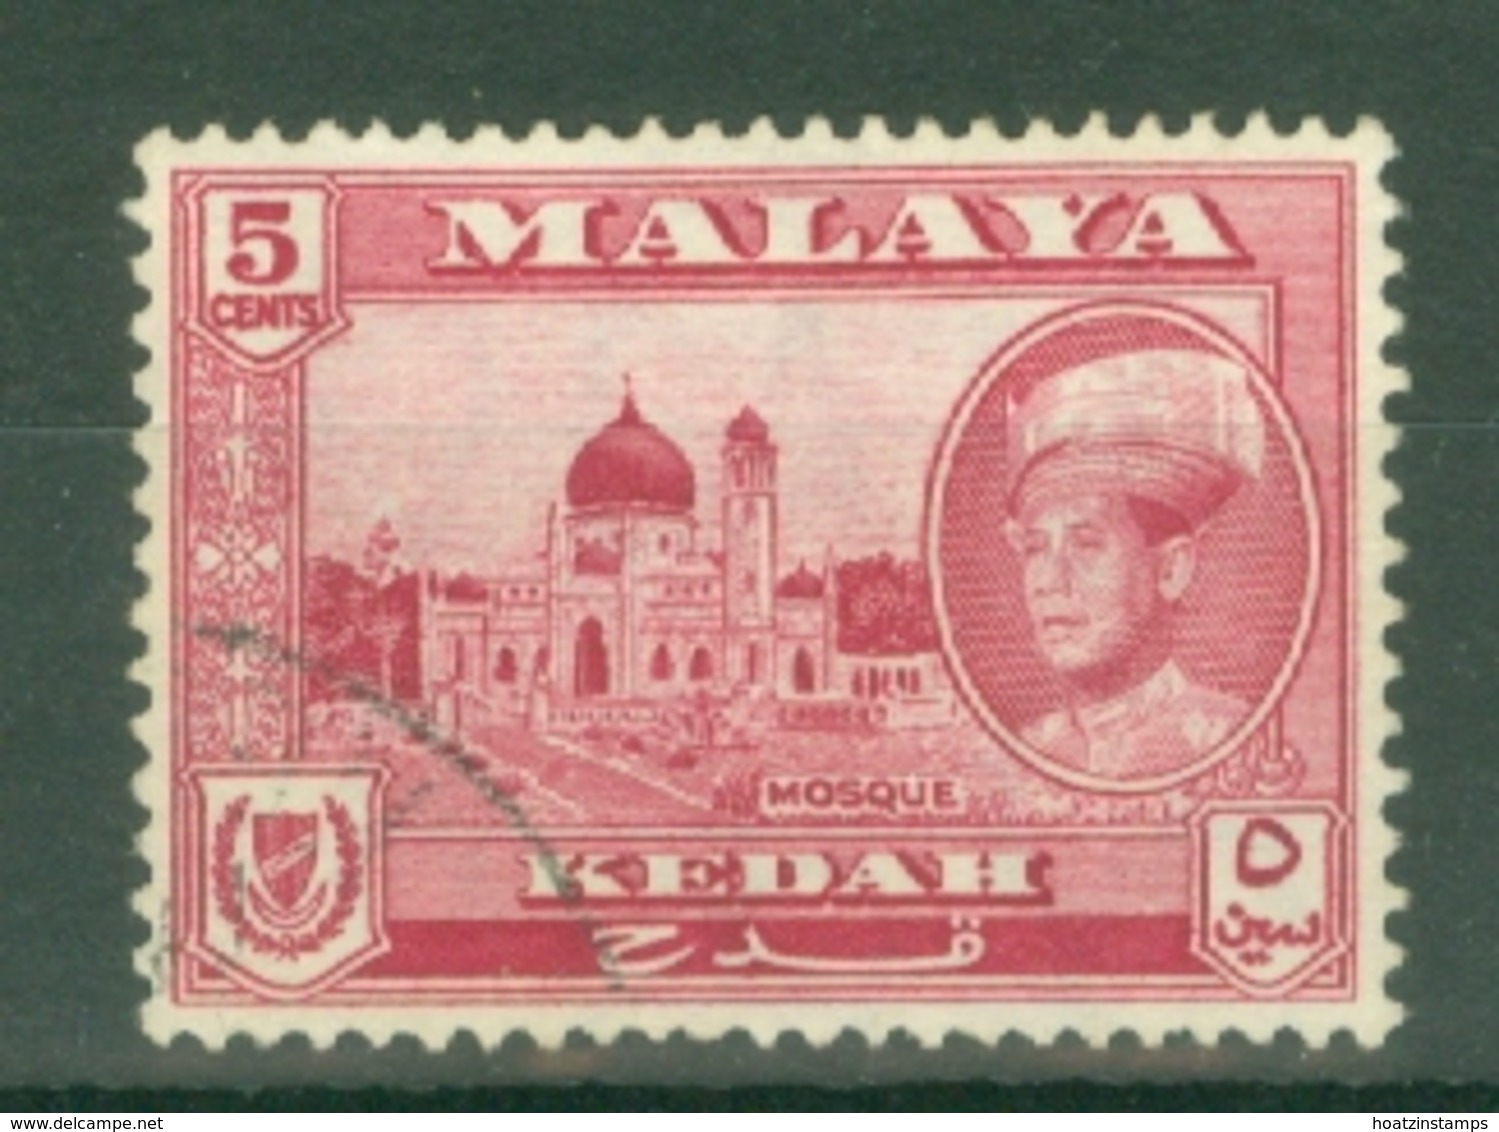 Malaya - Kedah: 1959/62   Sultan Abdul Halim Shah - Pictorial     SG107    5c  Used - Kedah